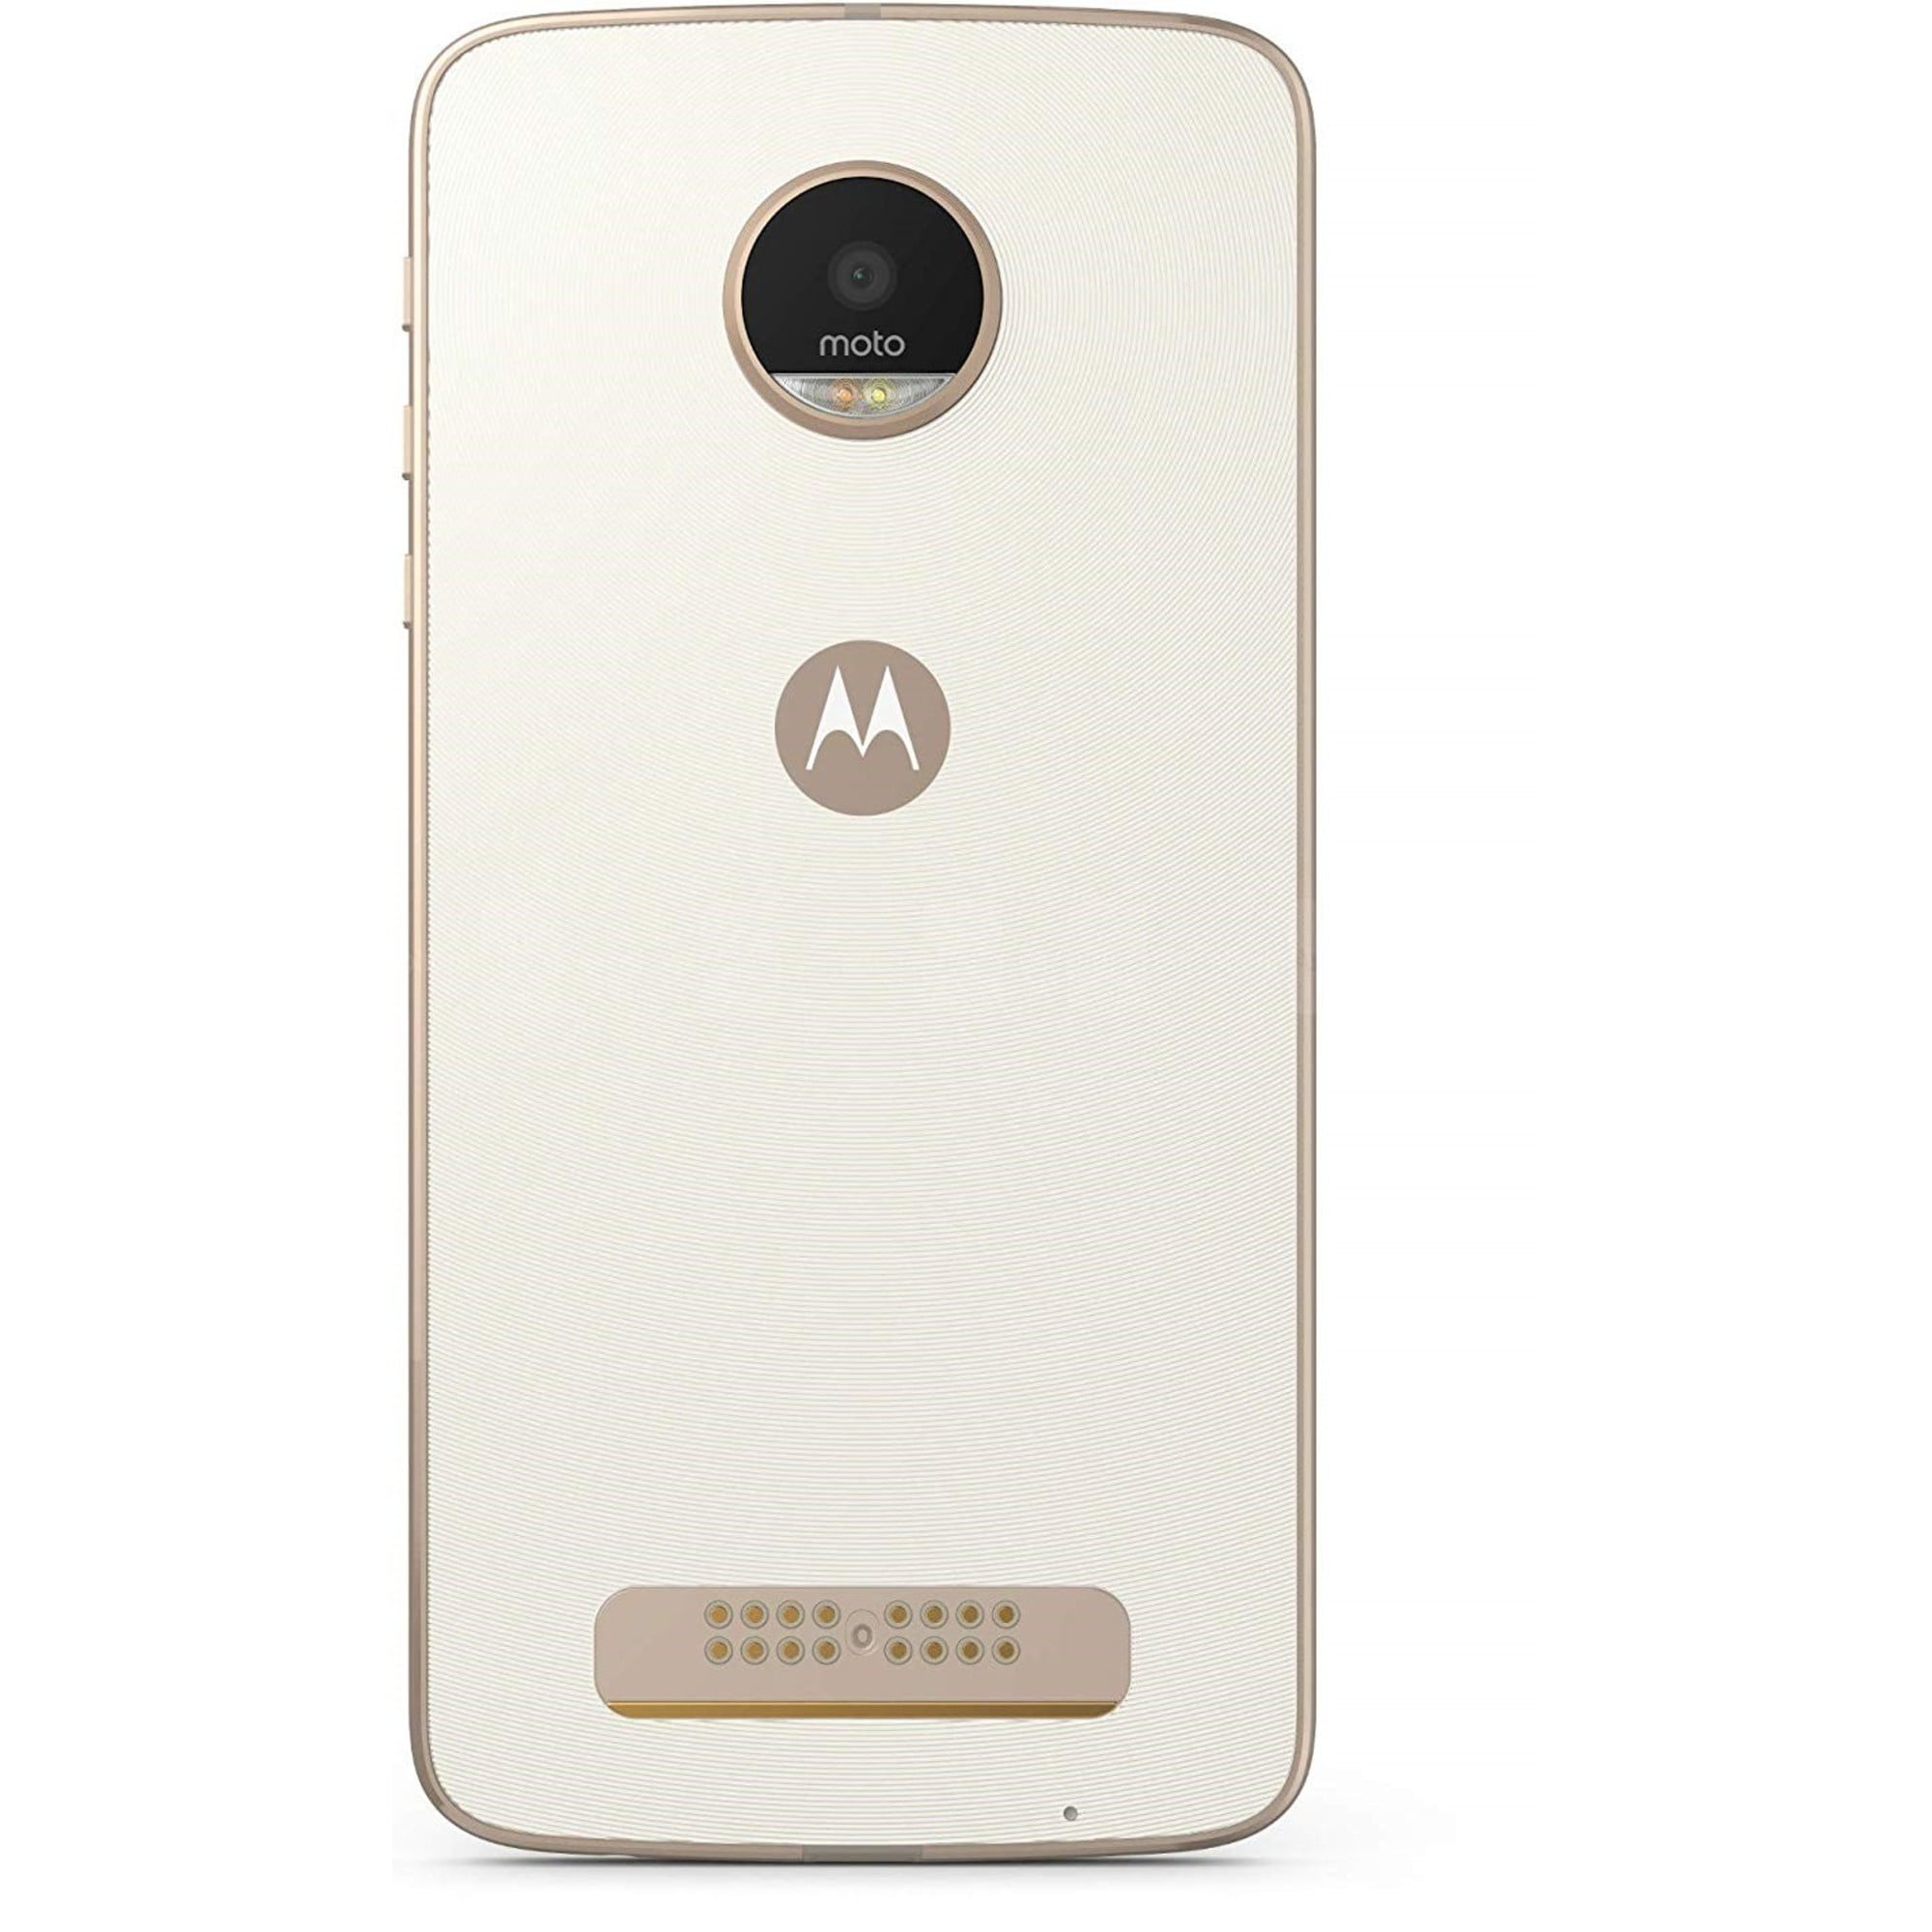 Moto Z Play XT1635-01 32GB Verizon Smartphone w/ Camera - White/Gold (Used) Walmart.com